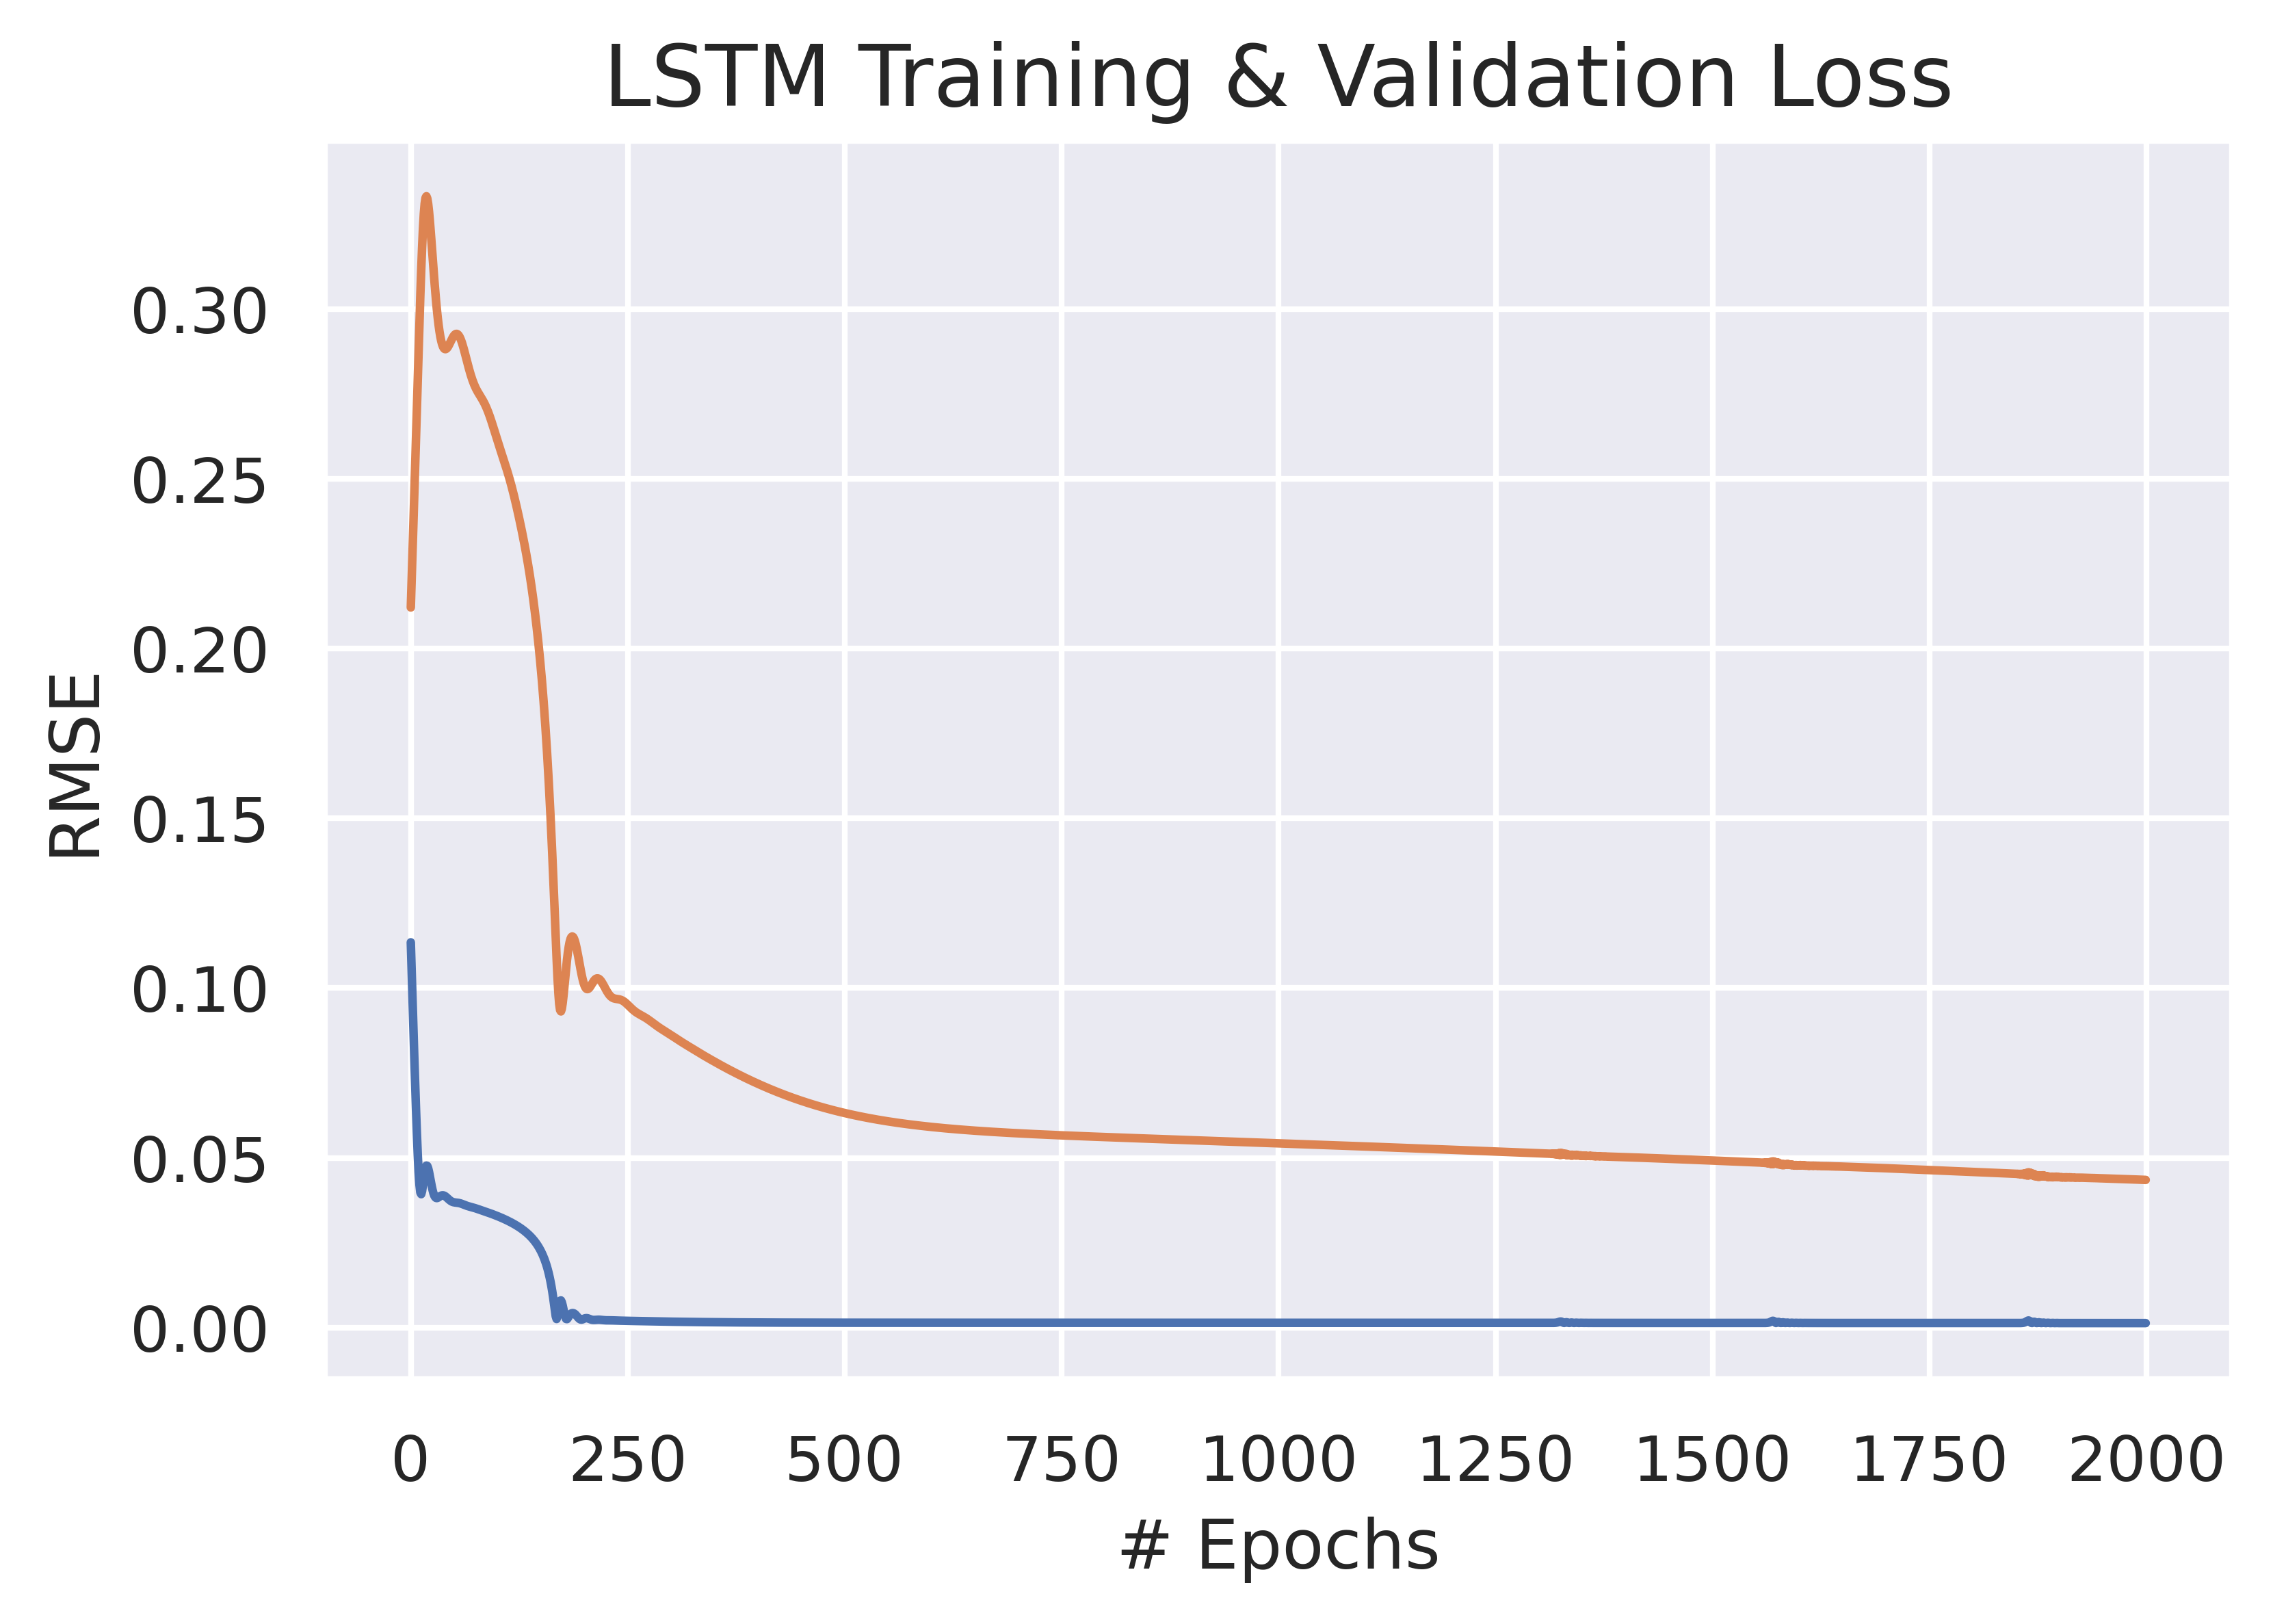 LSTM losses